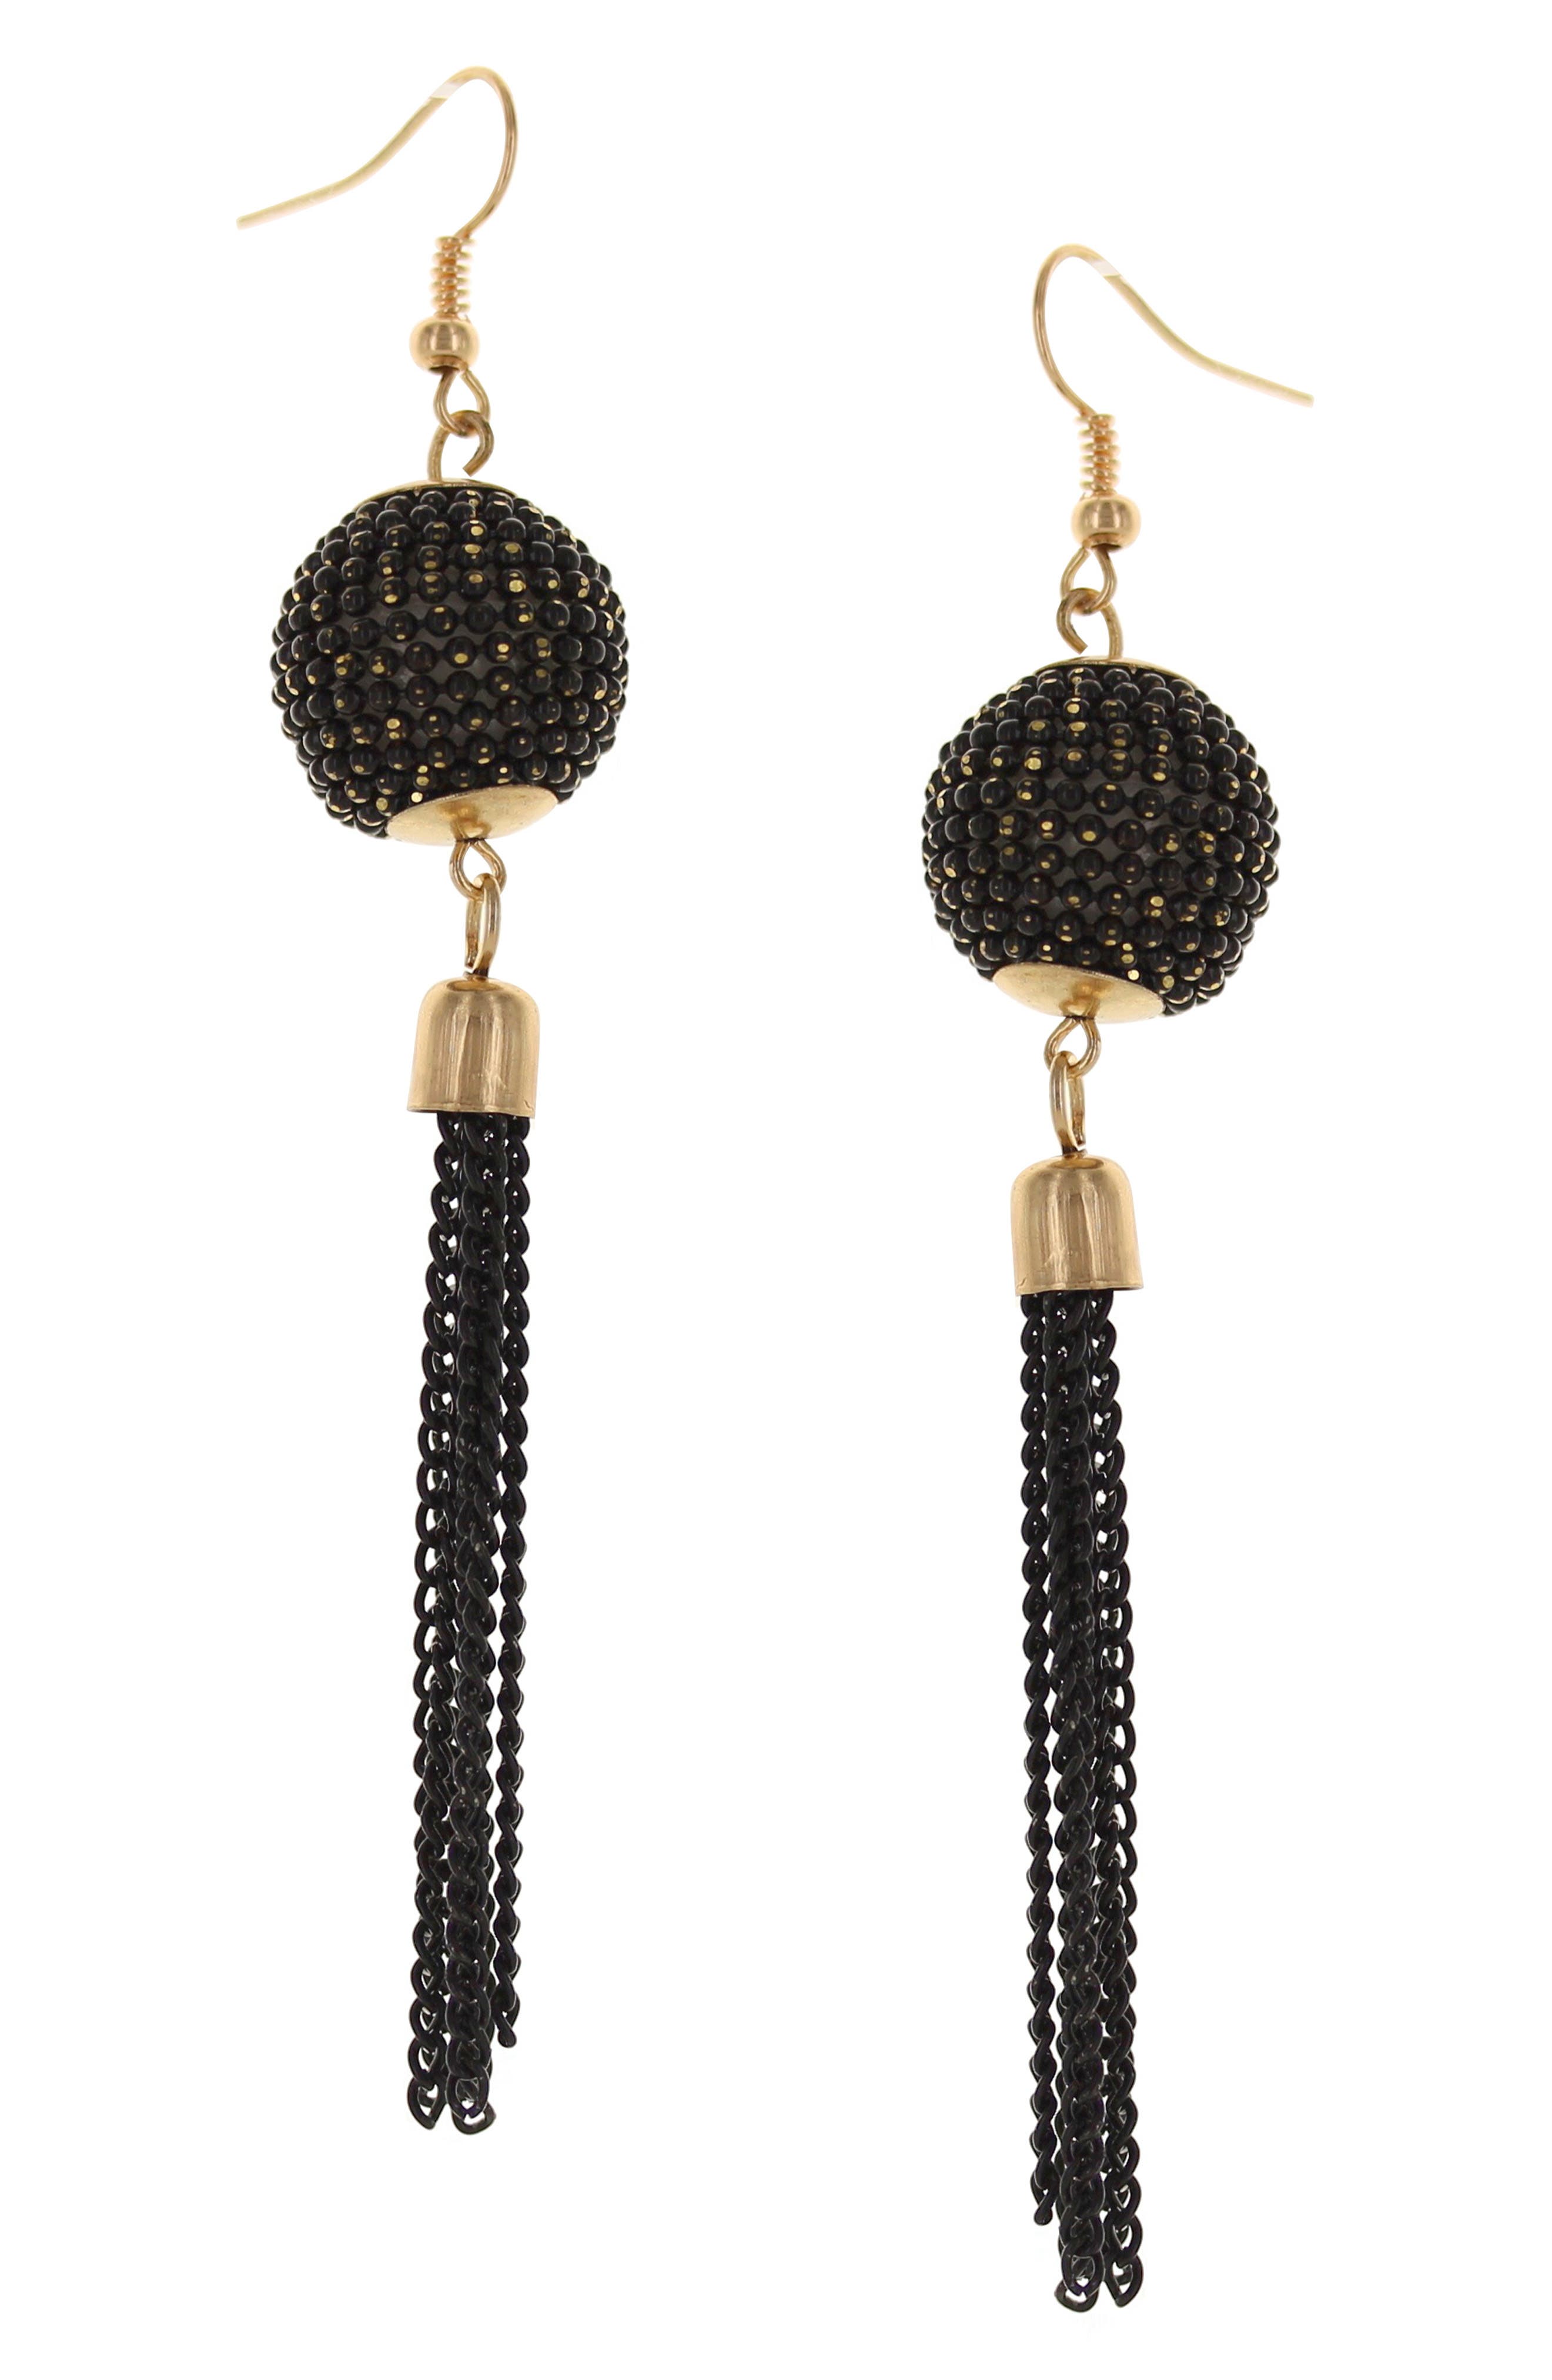 Vintage Style Jewelry, Retro Jewelry OLIVIA WELLES Disco Tassel Drop Earrings in Gold Black at Nordstrom Rack $24.97 AT vintagedancer.com